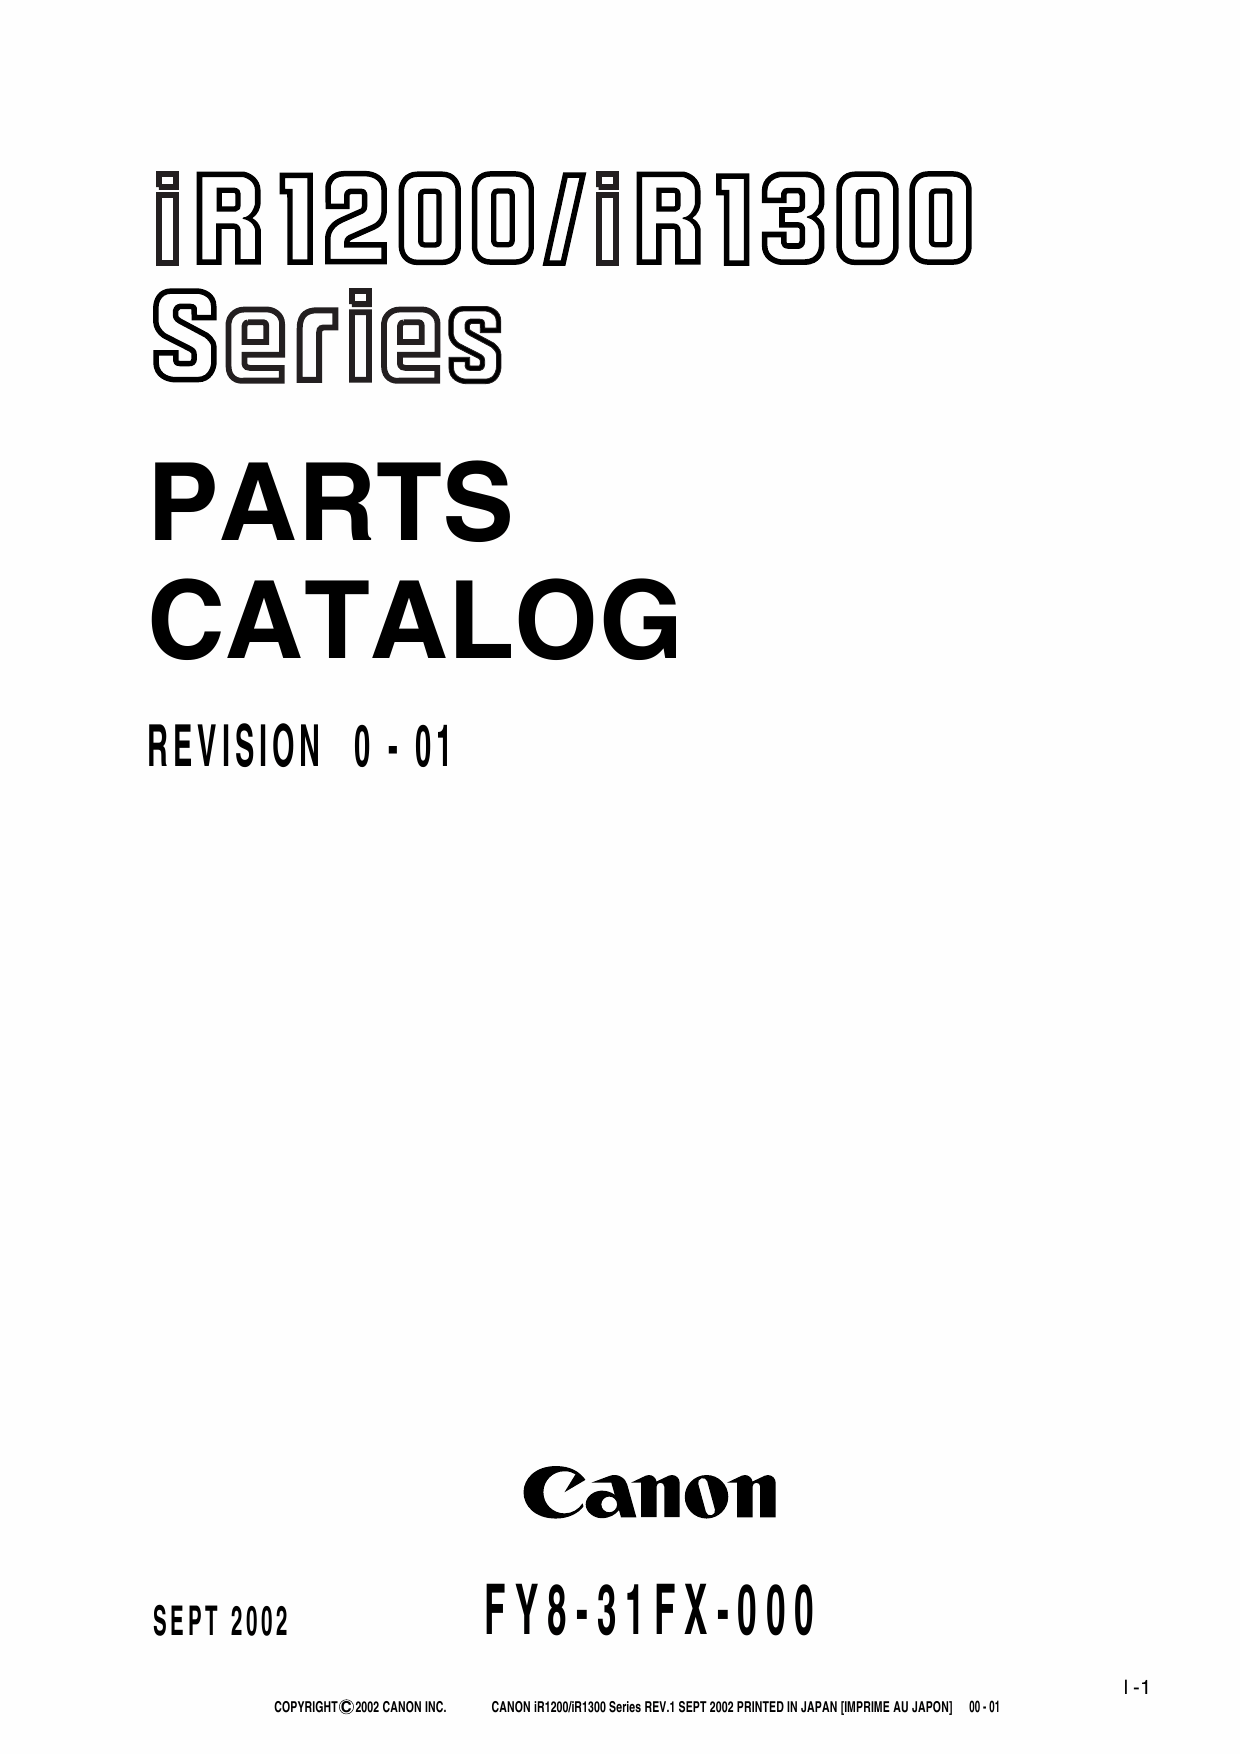 Canon imageRUNNER-iR 1200 1300 Parts Catalog-1